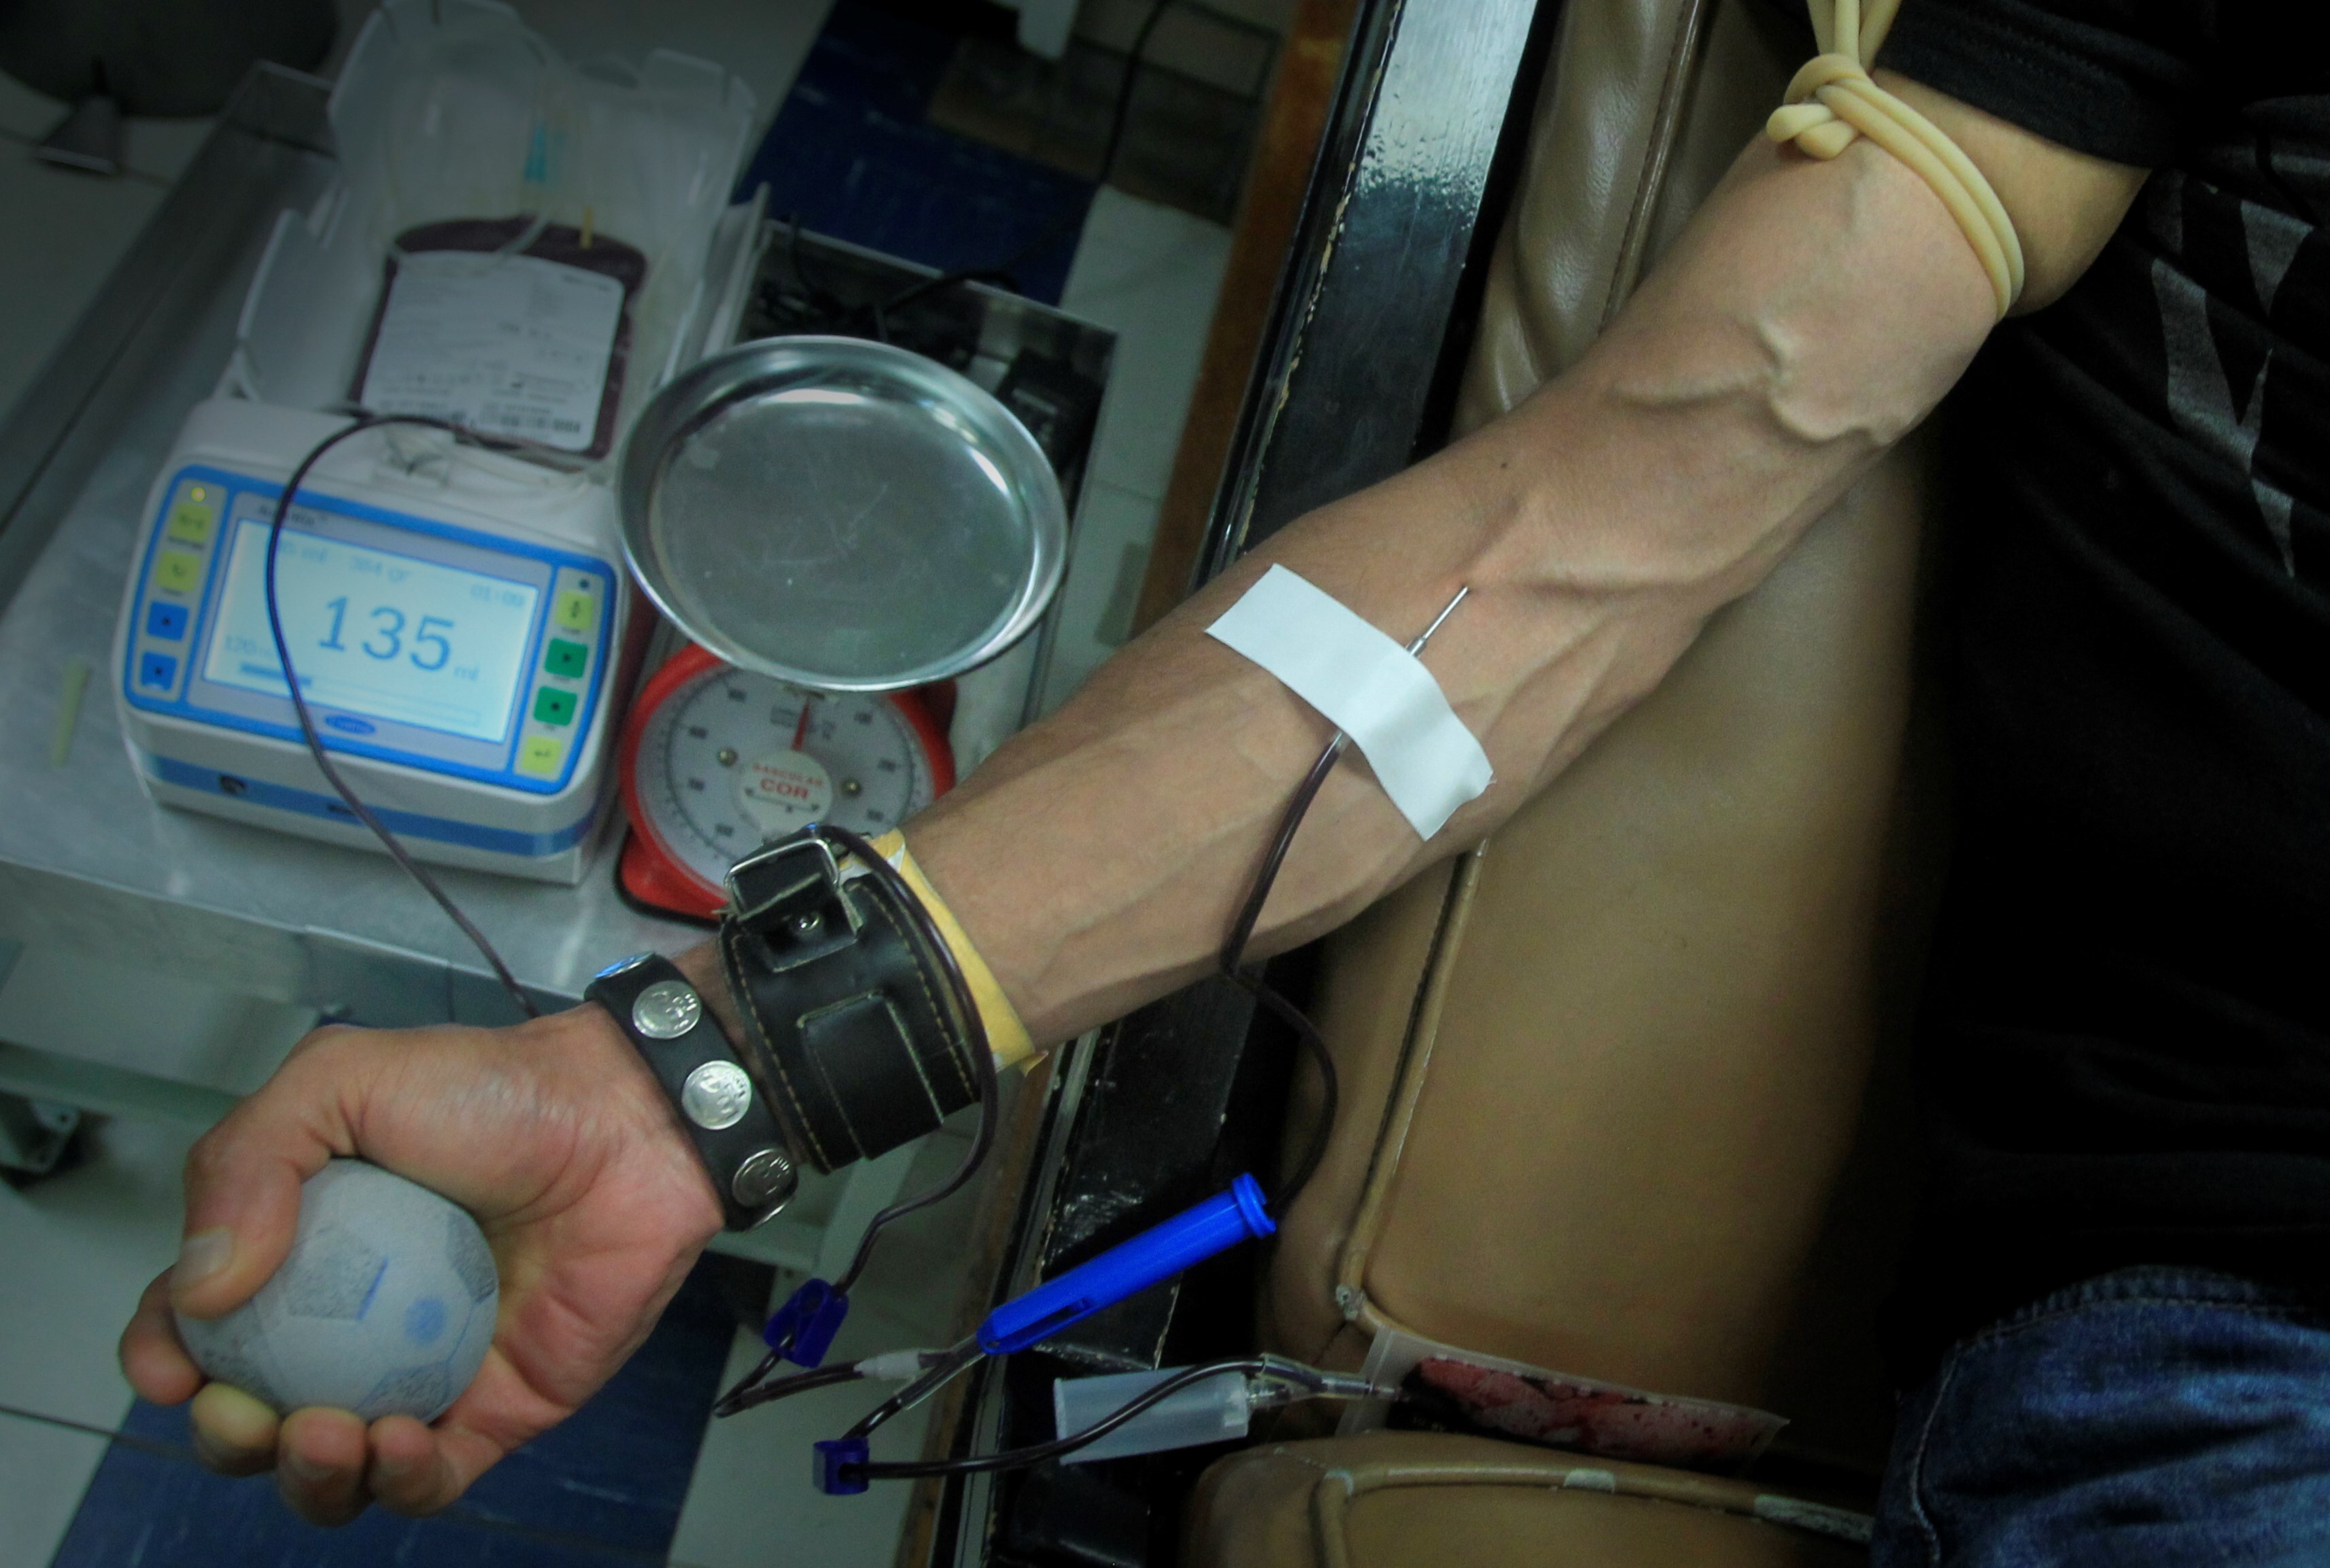 Pasos a seguir para donar sangre de manera segura en el Perú